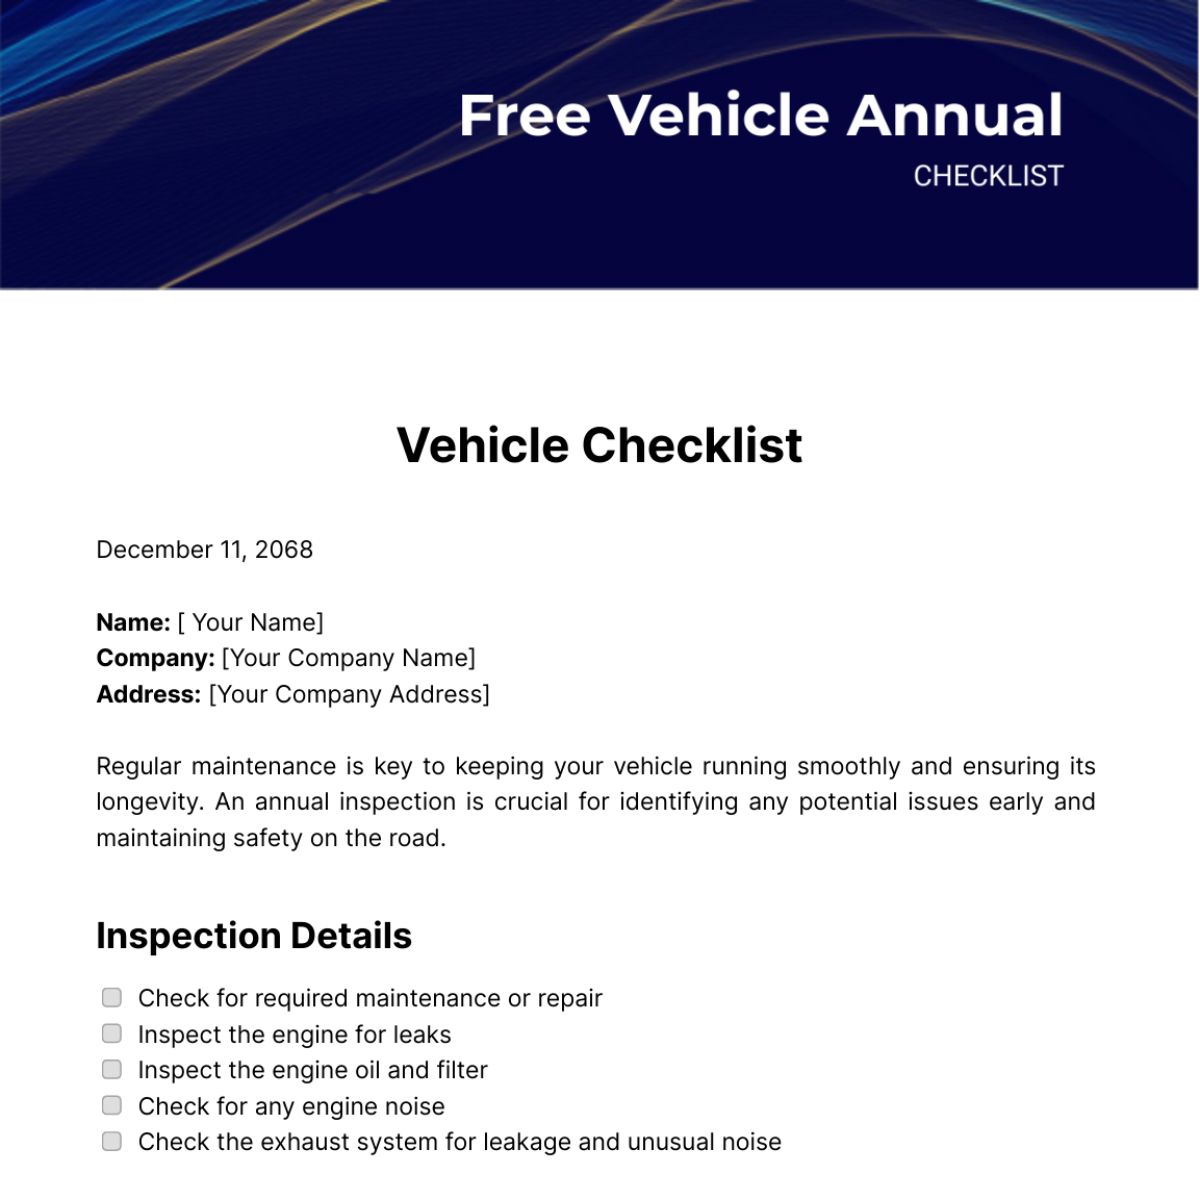 Free Vehicle Annual Checklist Template